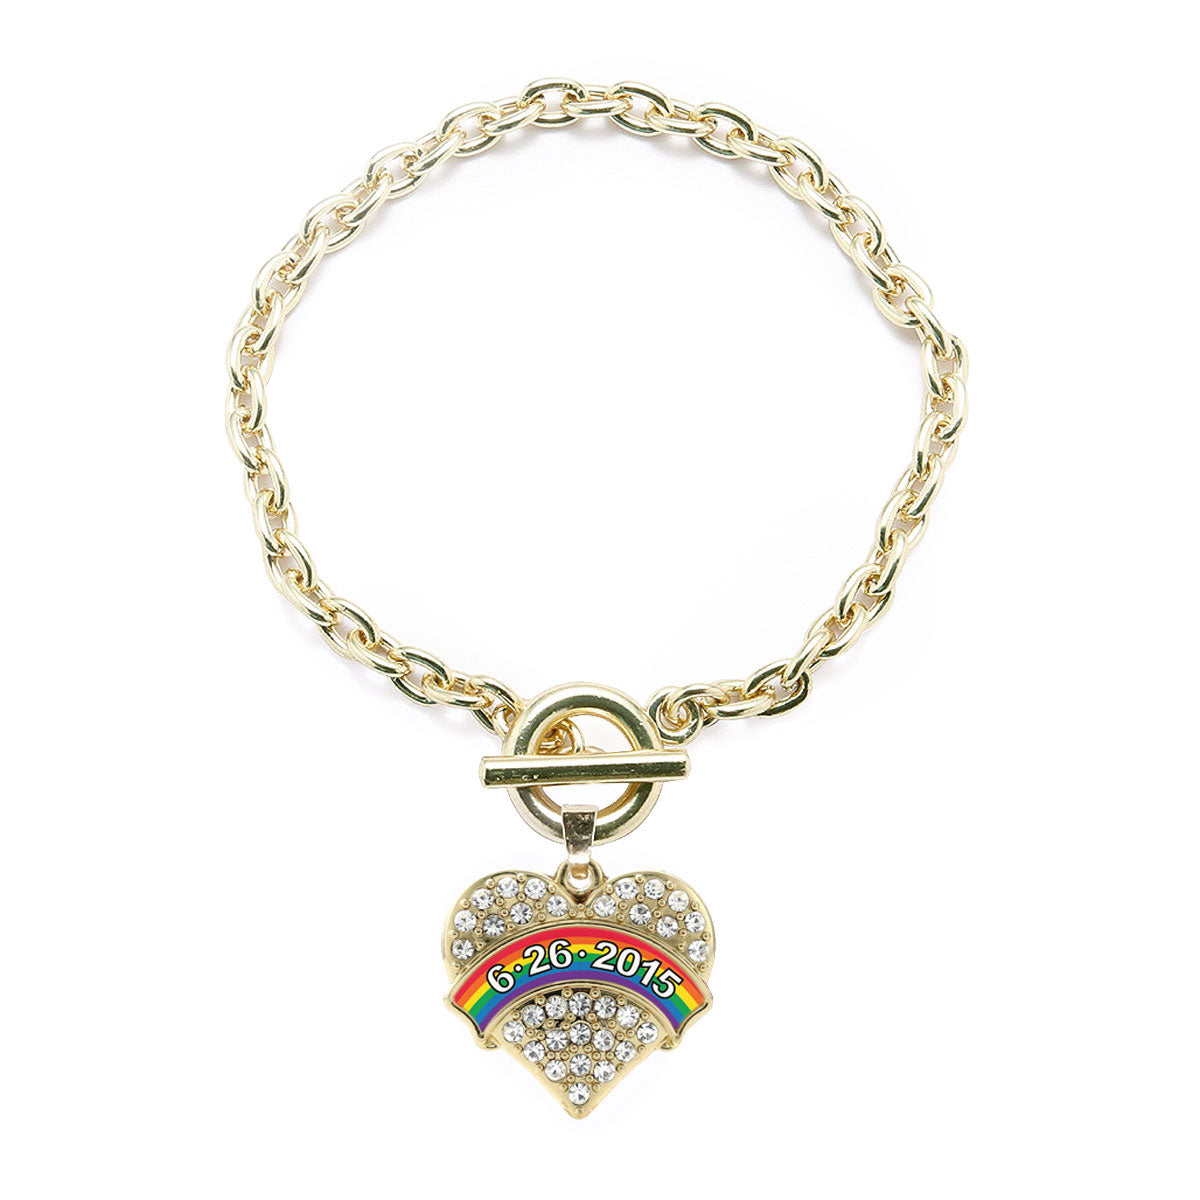 Gold Marriage Equality - 6.26.15 Pave Heart Charm Toggle Bracelet